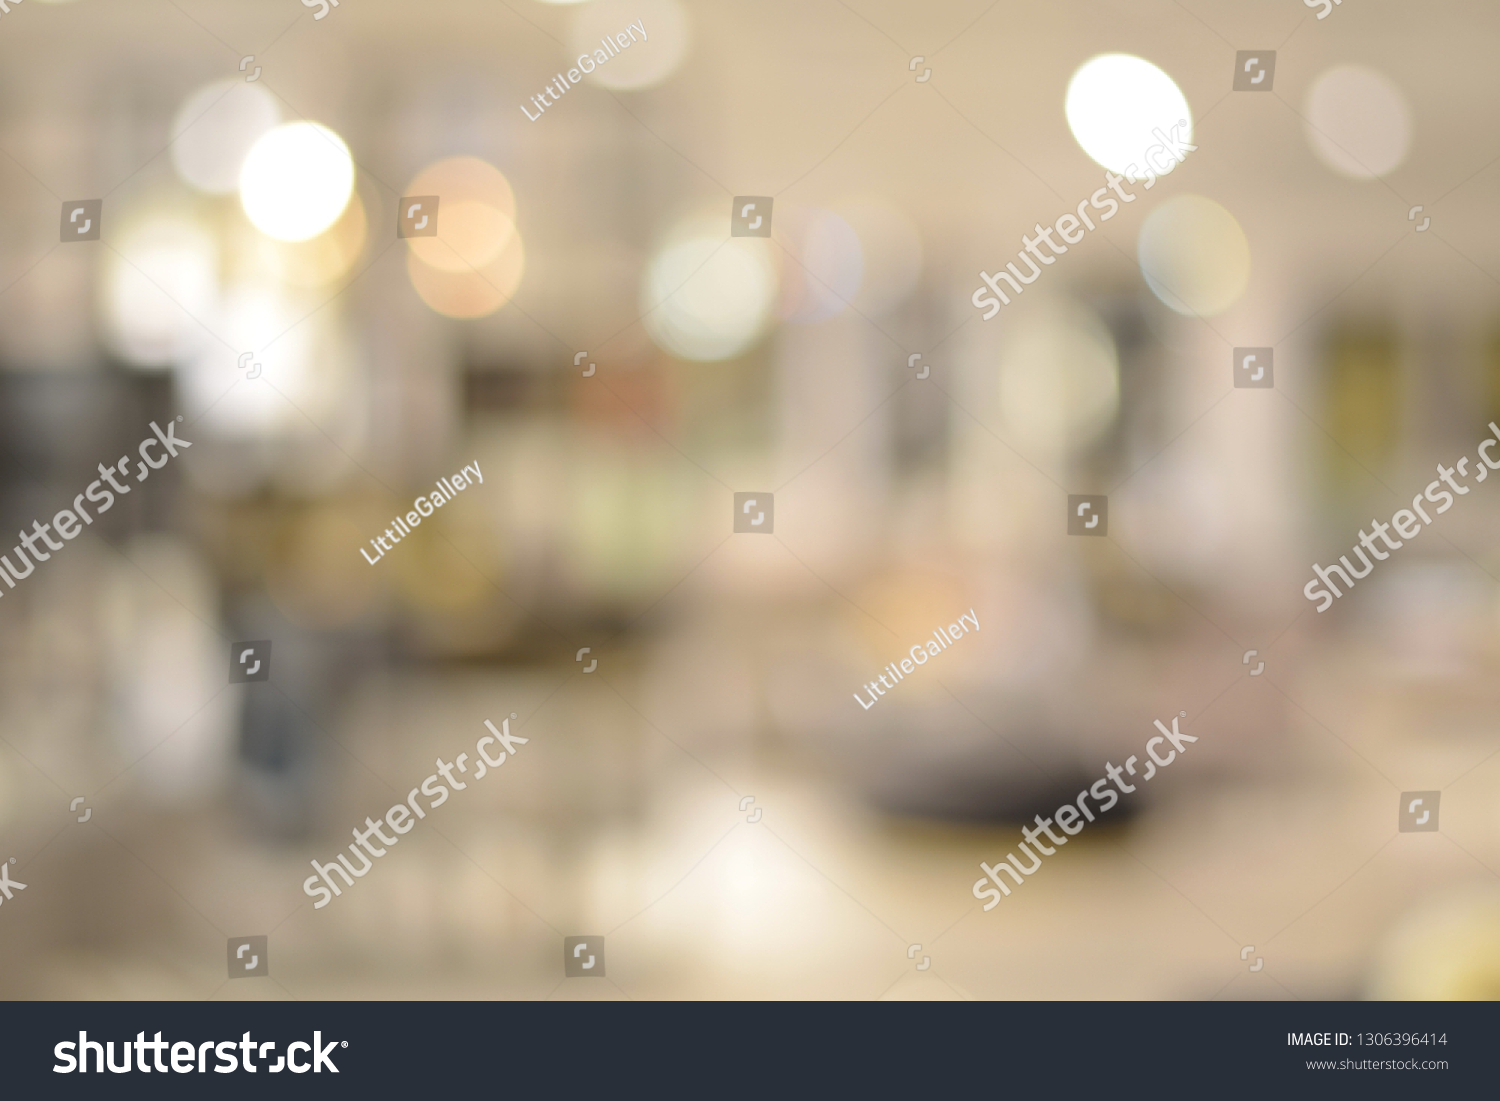 Blurred image of living room with light bokeh for background,use for backdrop or web design,interior design. #1306396414